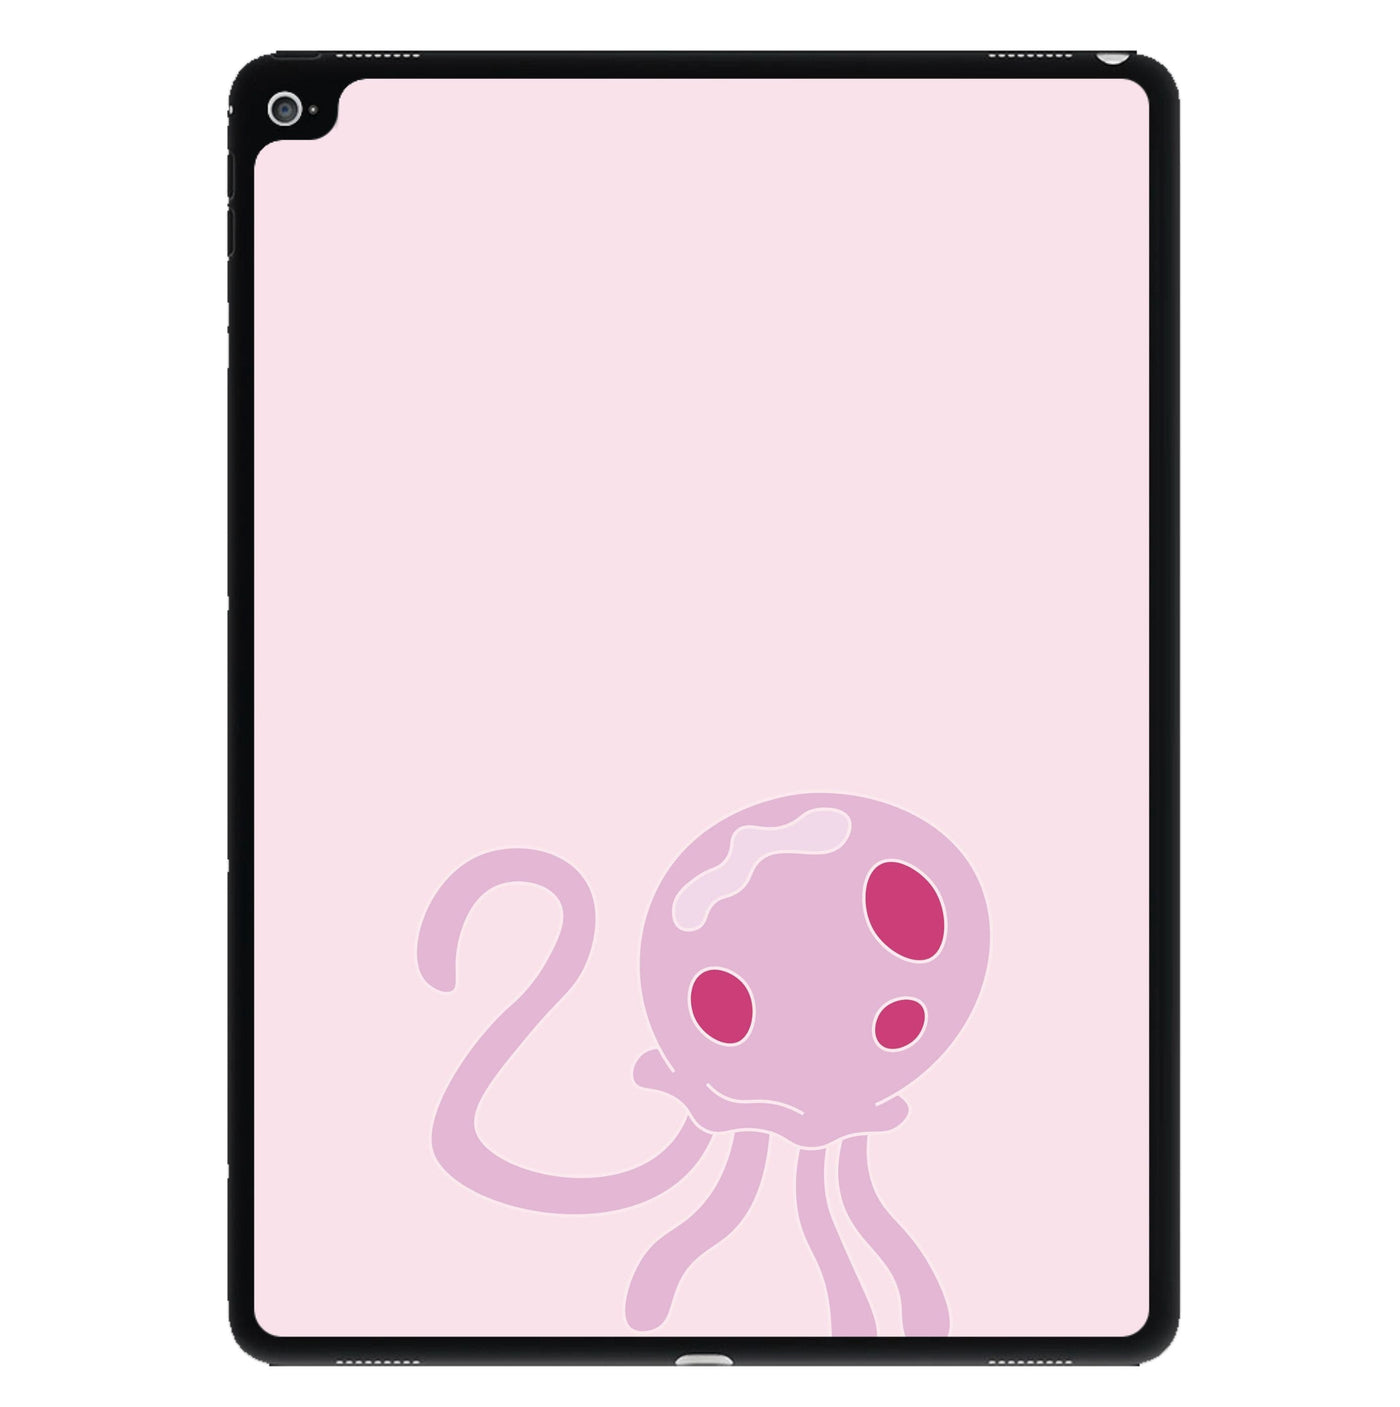 Jellyfish - Spongebob iPad Case